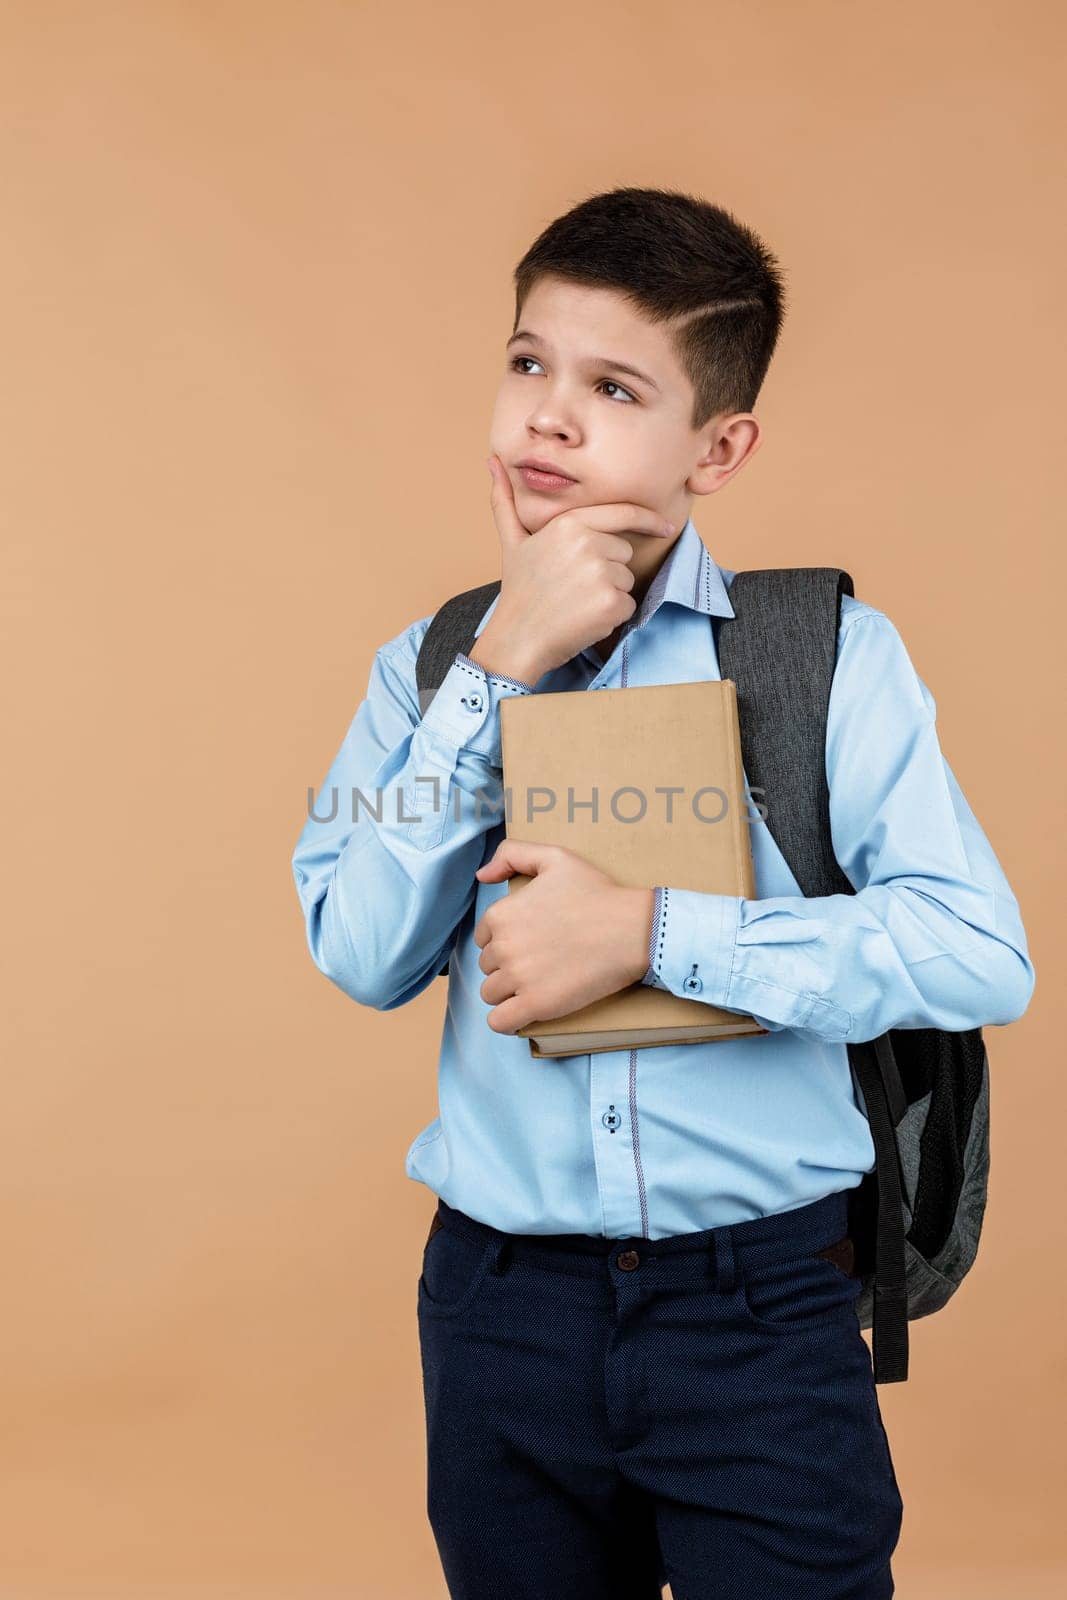 little cheerful school boy holding a book by erstudio